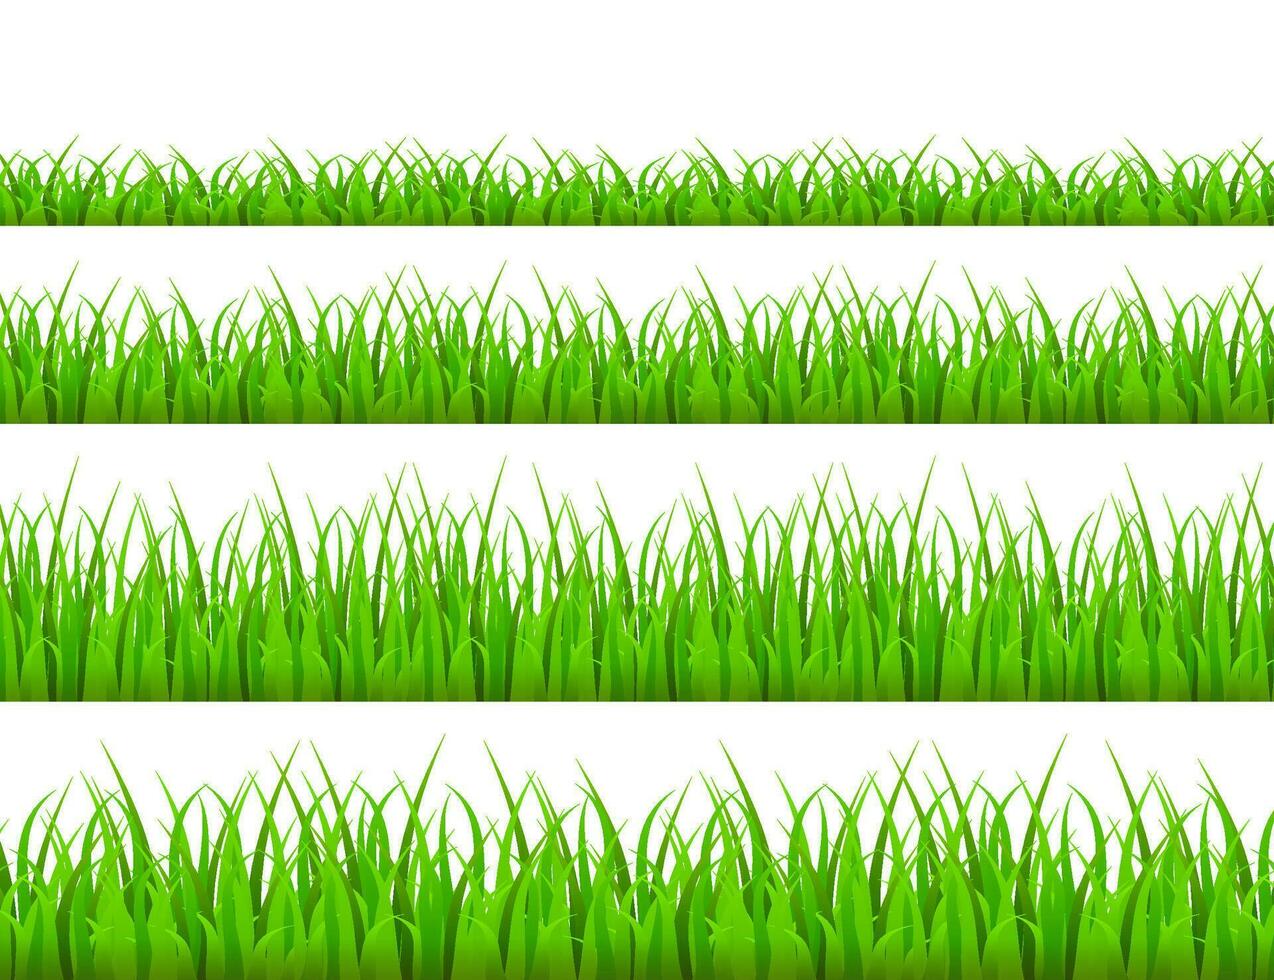 verde césped prado frontera vector modelo. césped antecedentes vector ilustración.